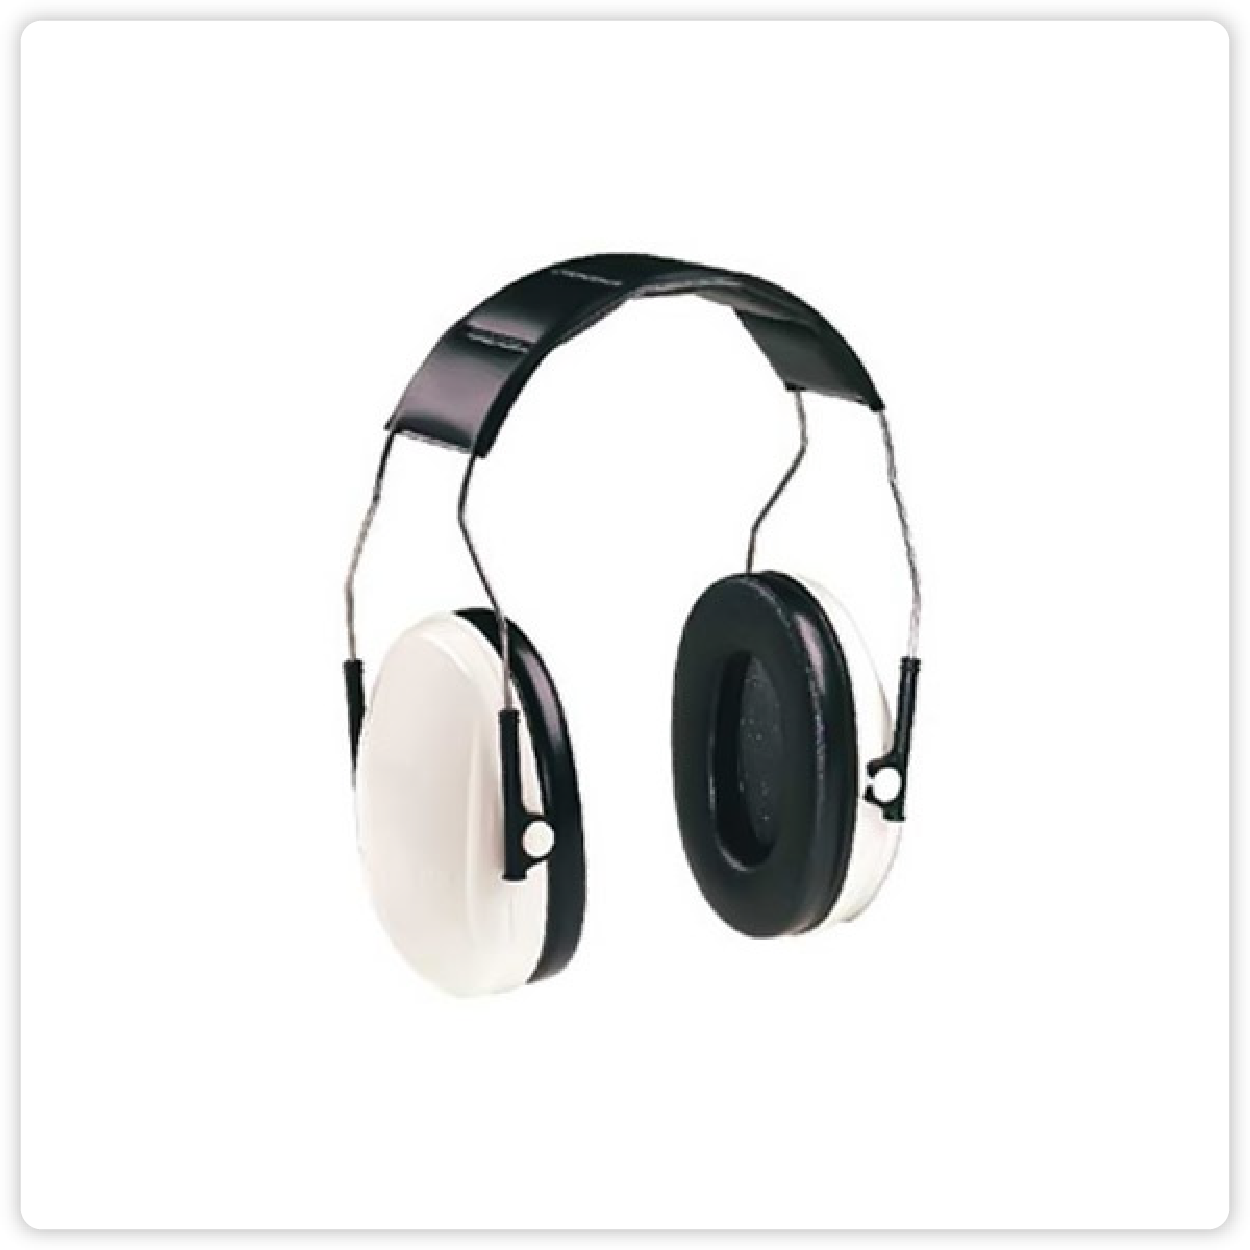 protector auditivo para casco peltor elementos de protección industrial